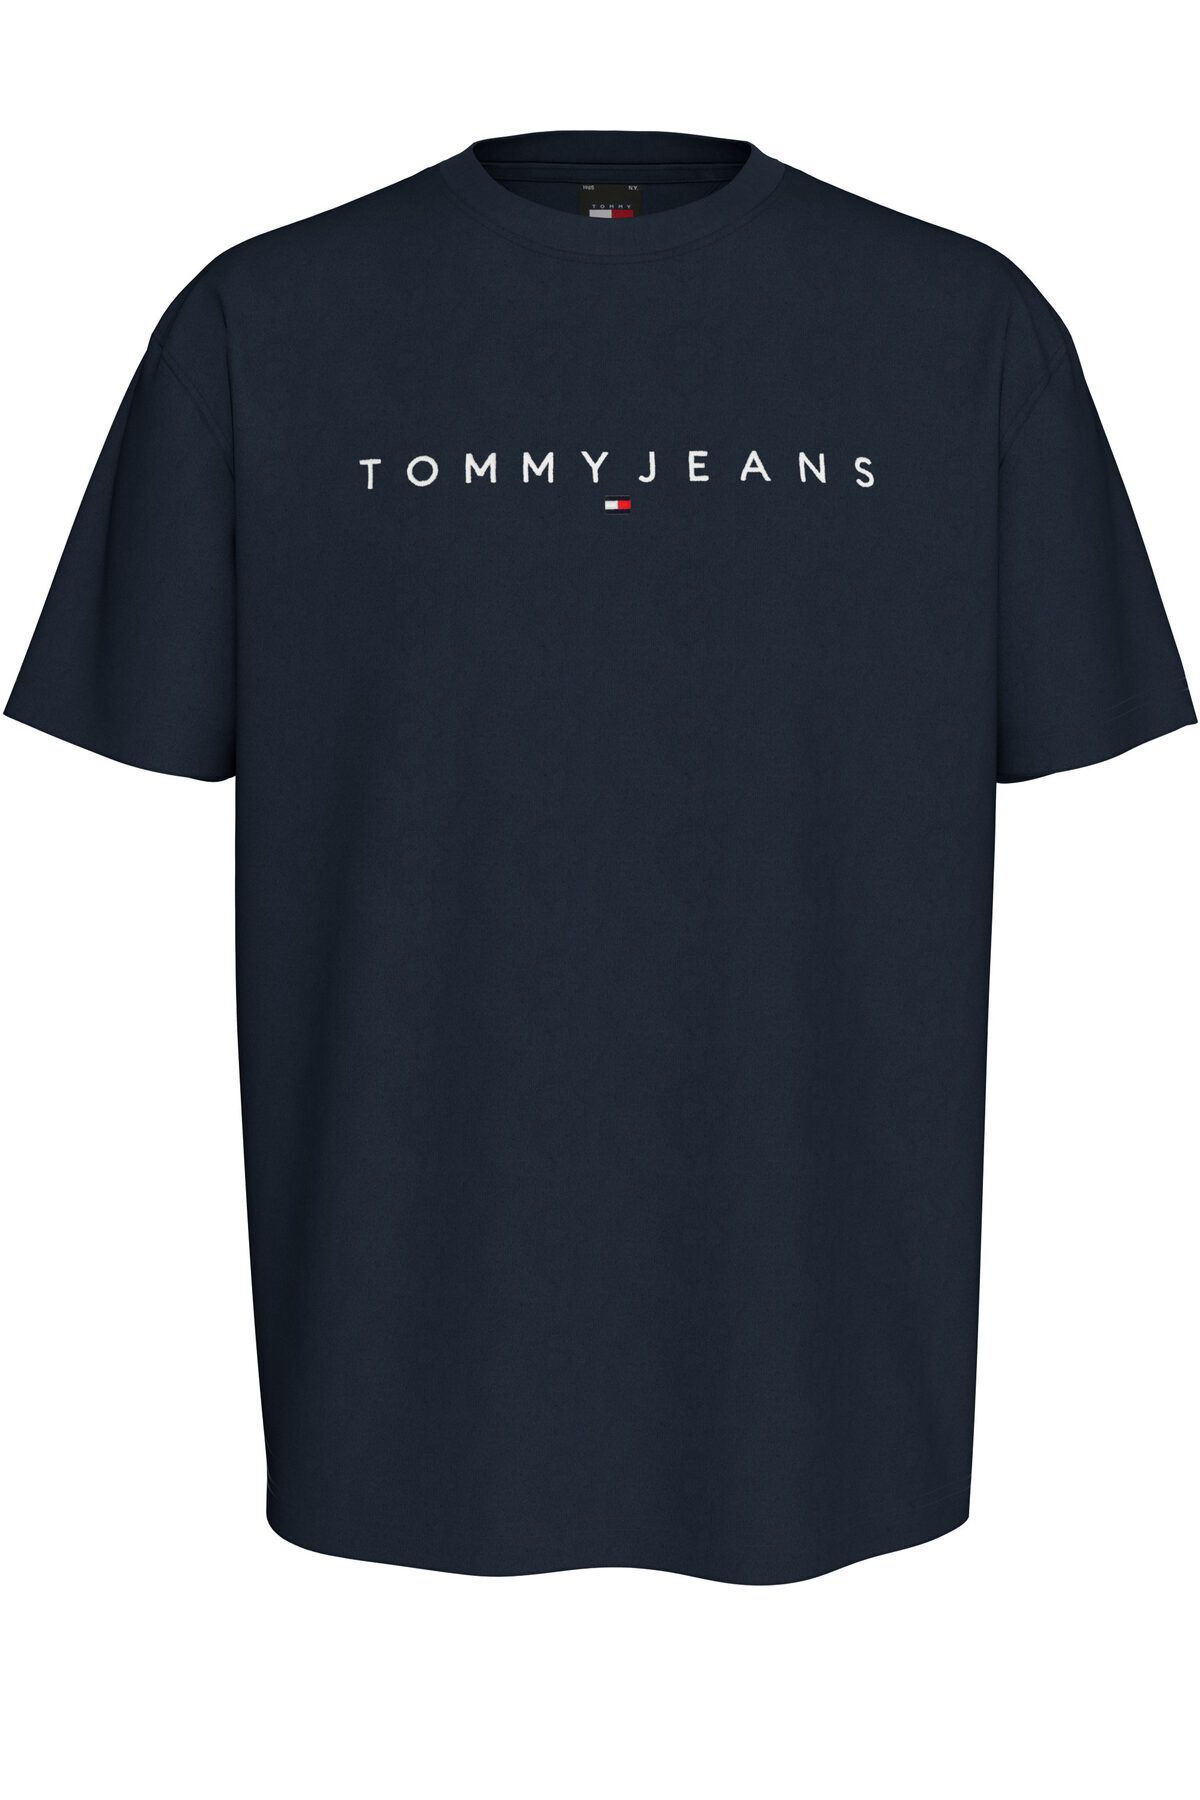 Tommy Hilfiger Erkek Marka Logolu Günlük Kullanıma Uygun Lacivert T-Shirt Dm0dm17993-C1g